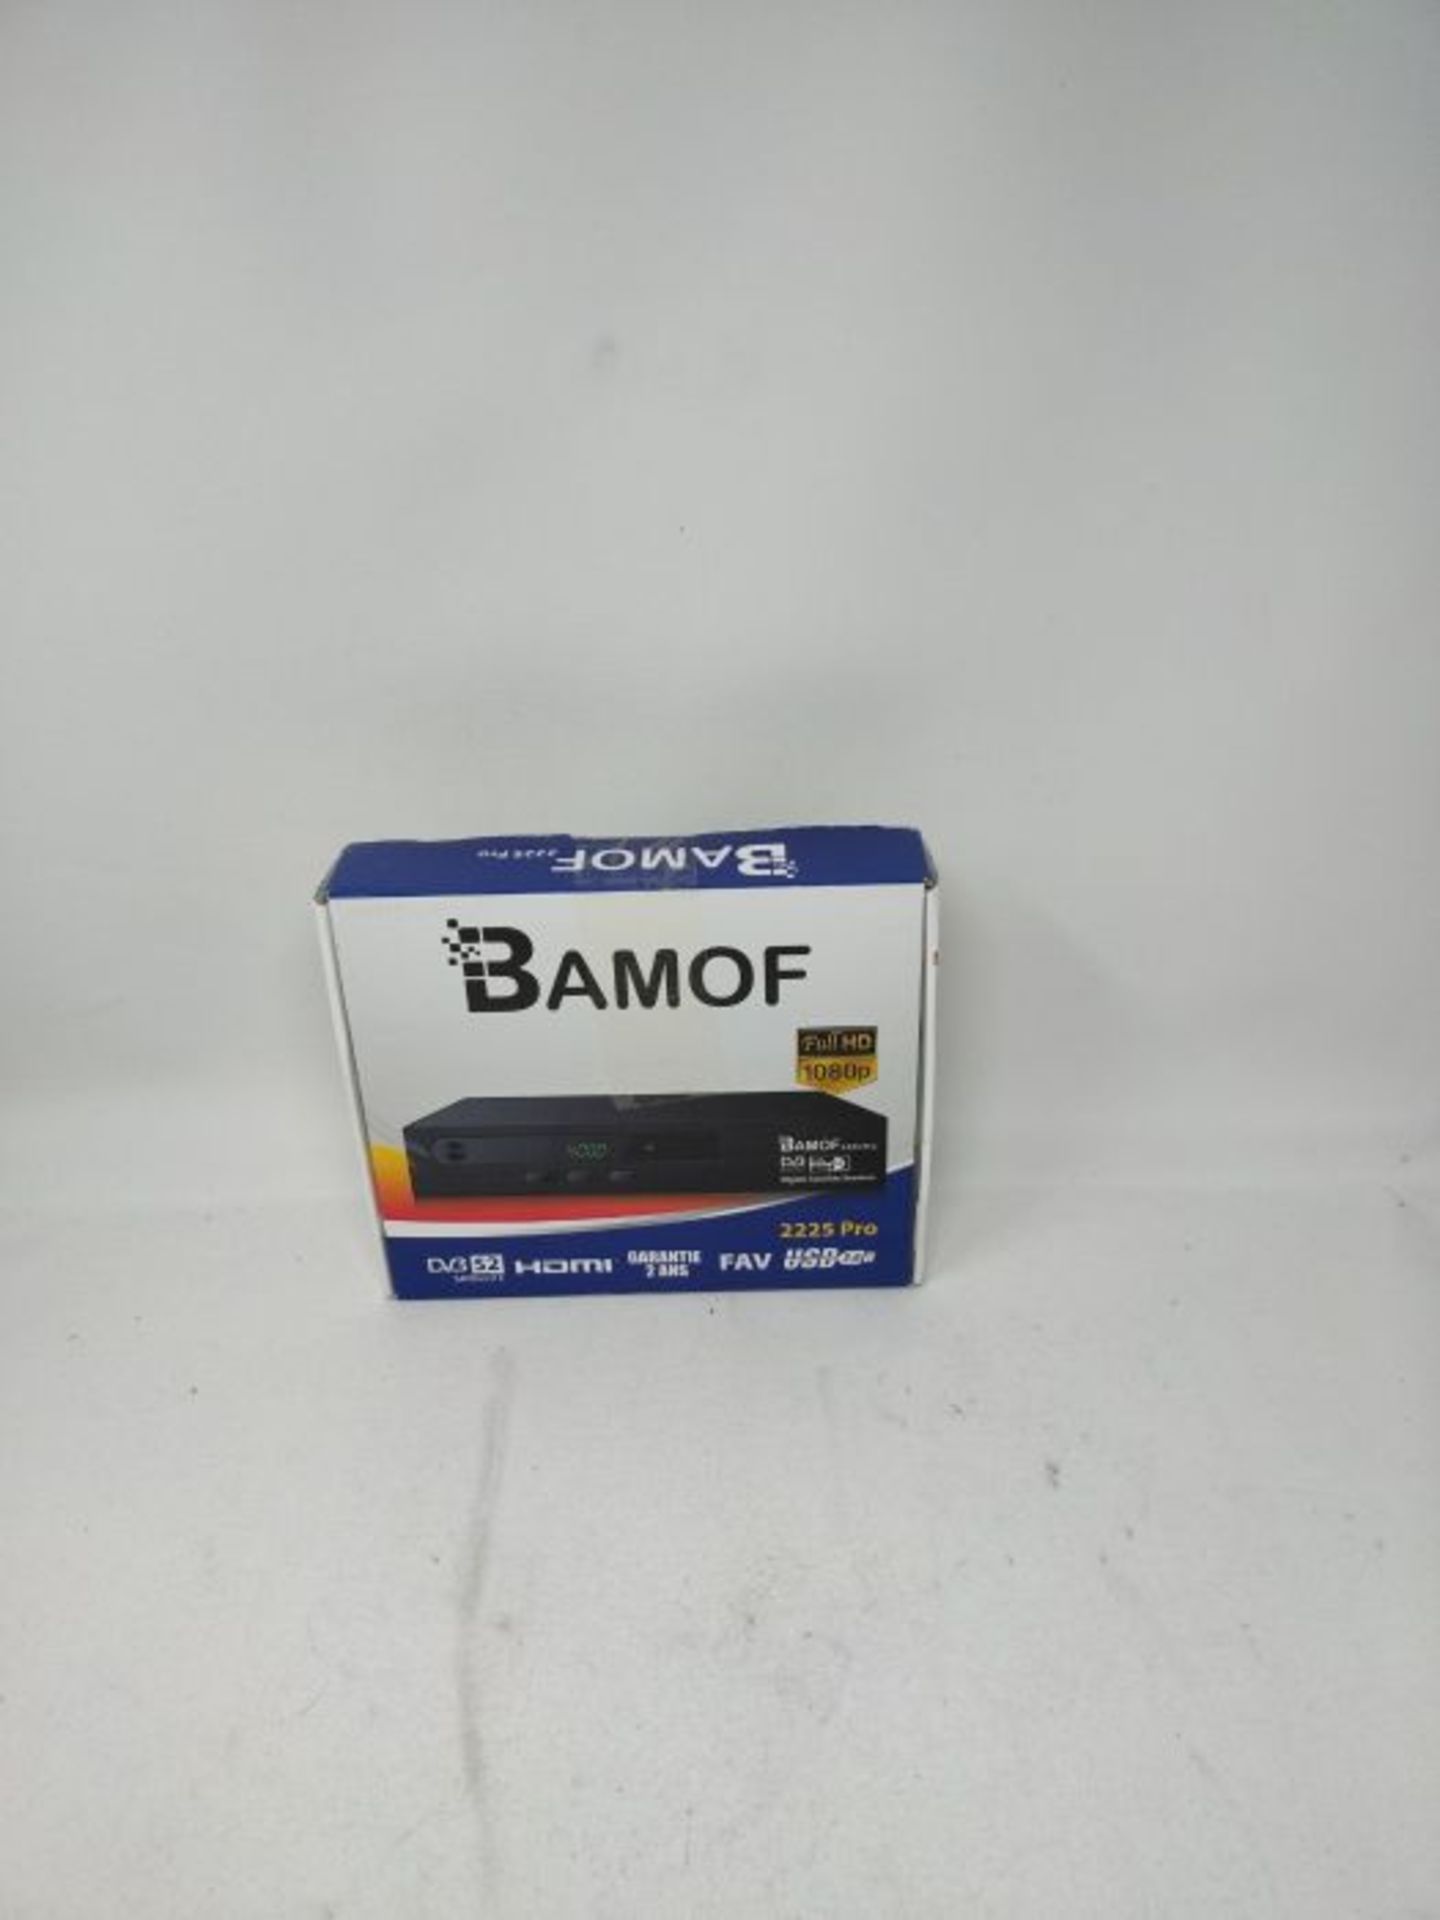 Bamof 2225 PRO Sat Receiver Digitaler Satelliten Receiver- (HDTV, DVB-S /DVB-S2, HDMI, - Image 2 of 3